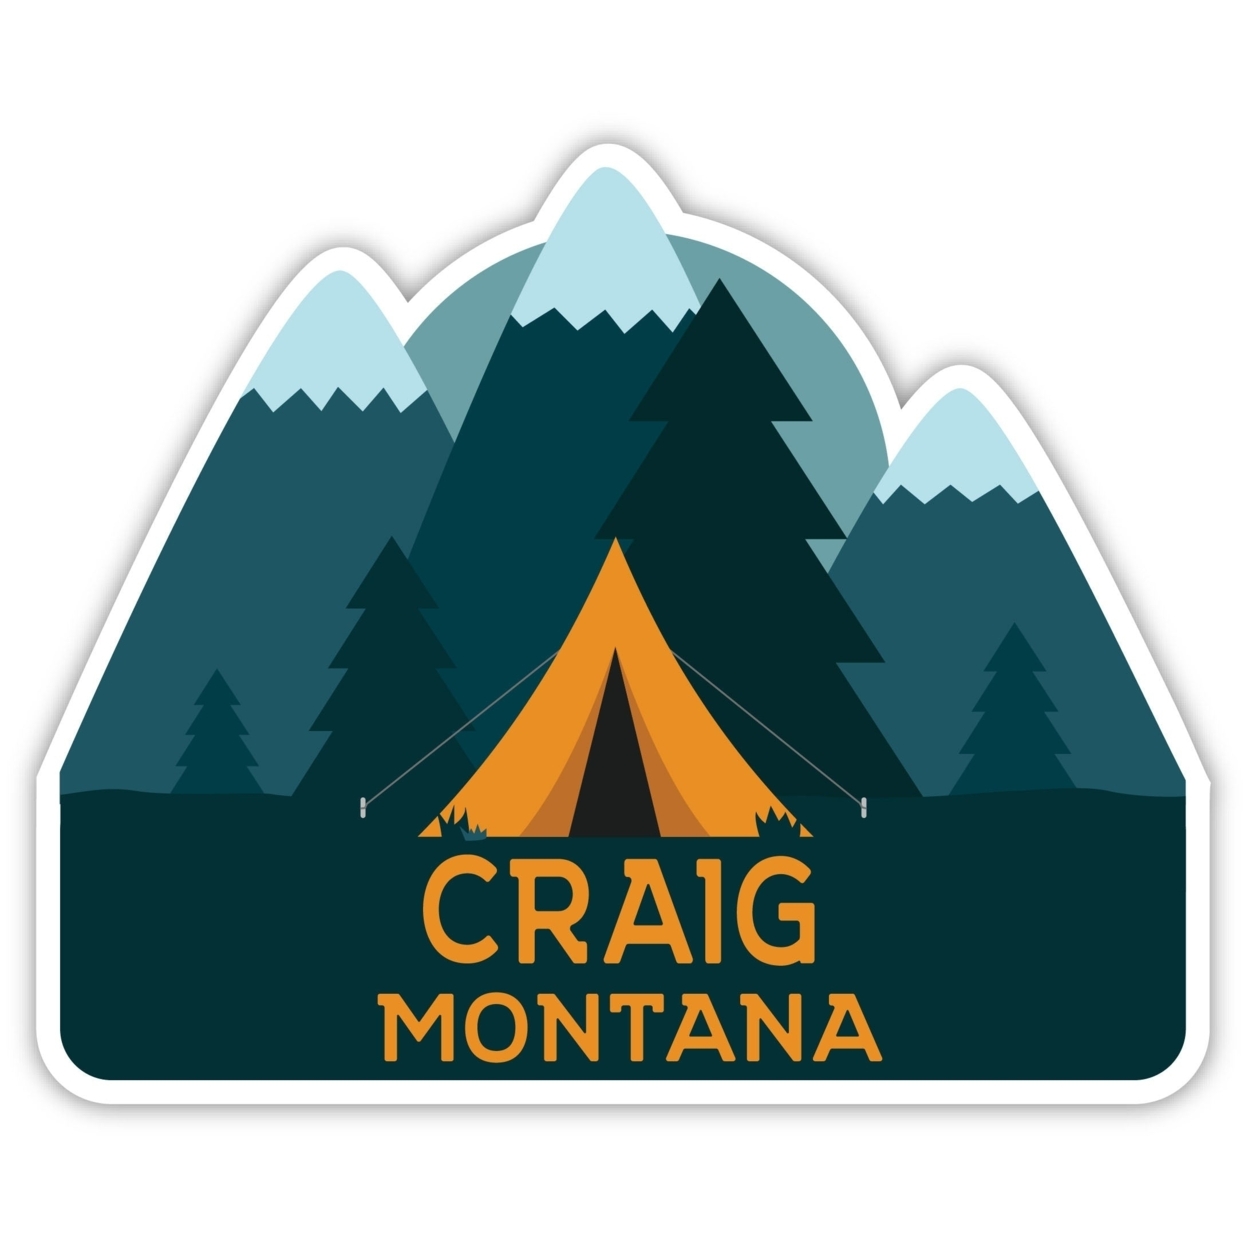 Craig Montana Souvenir Decorative Stickers (Choose Theme And Size) - 4-Pack, 12-Inch, Tent